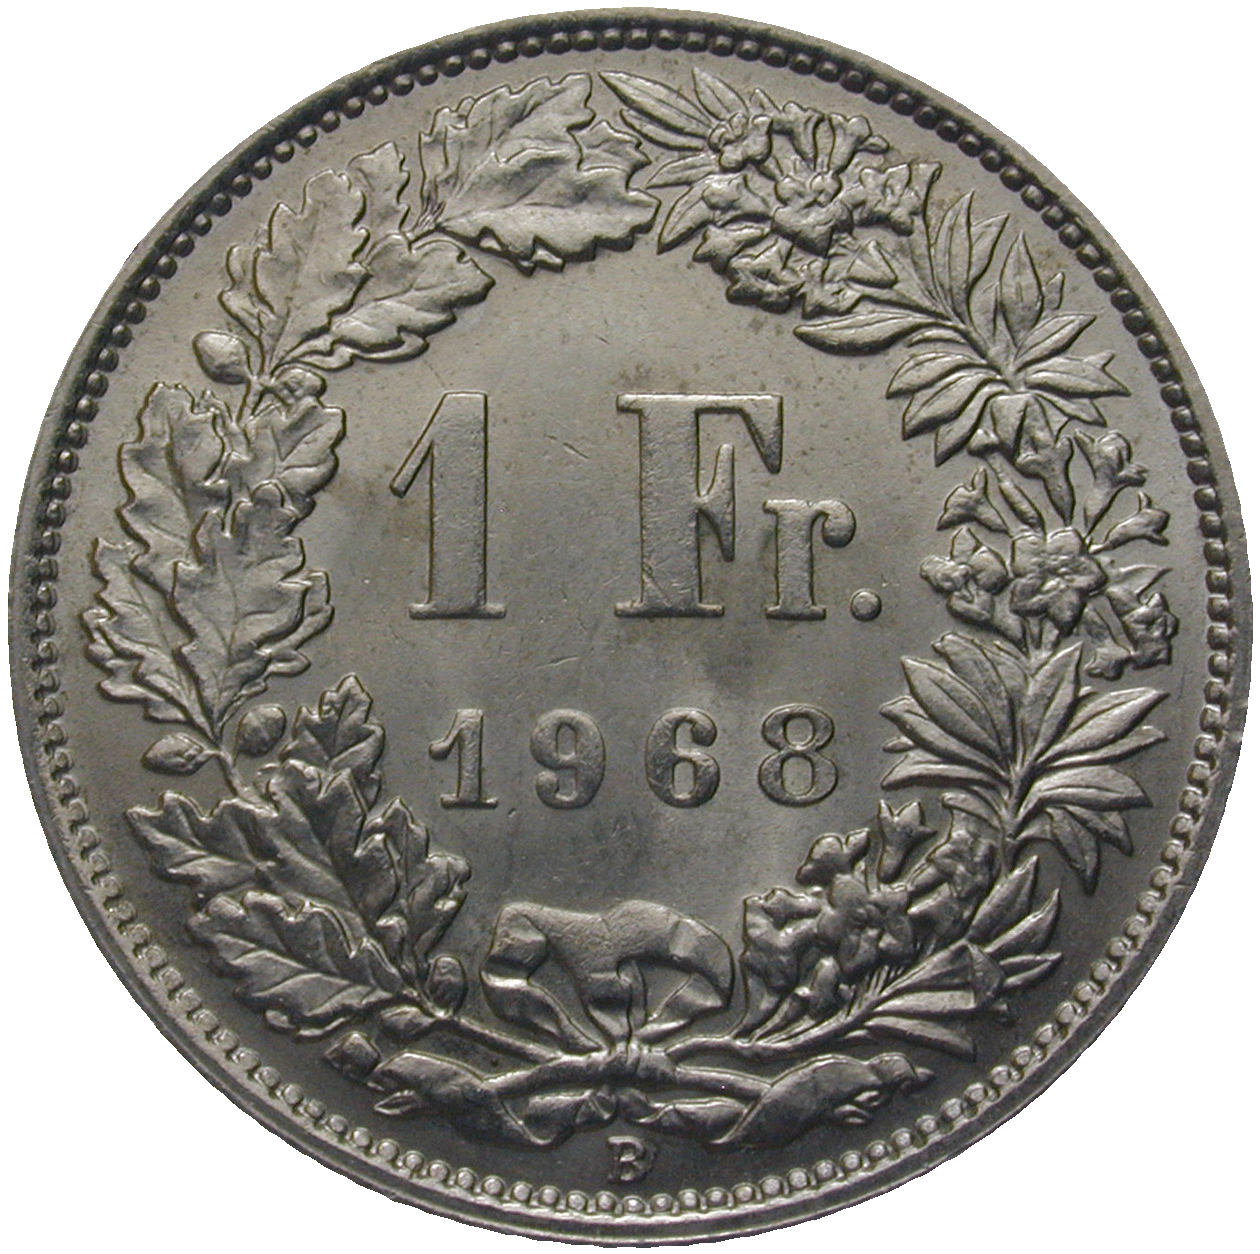 Swiss Confederation, 1 Franc 1968 (reverse)